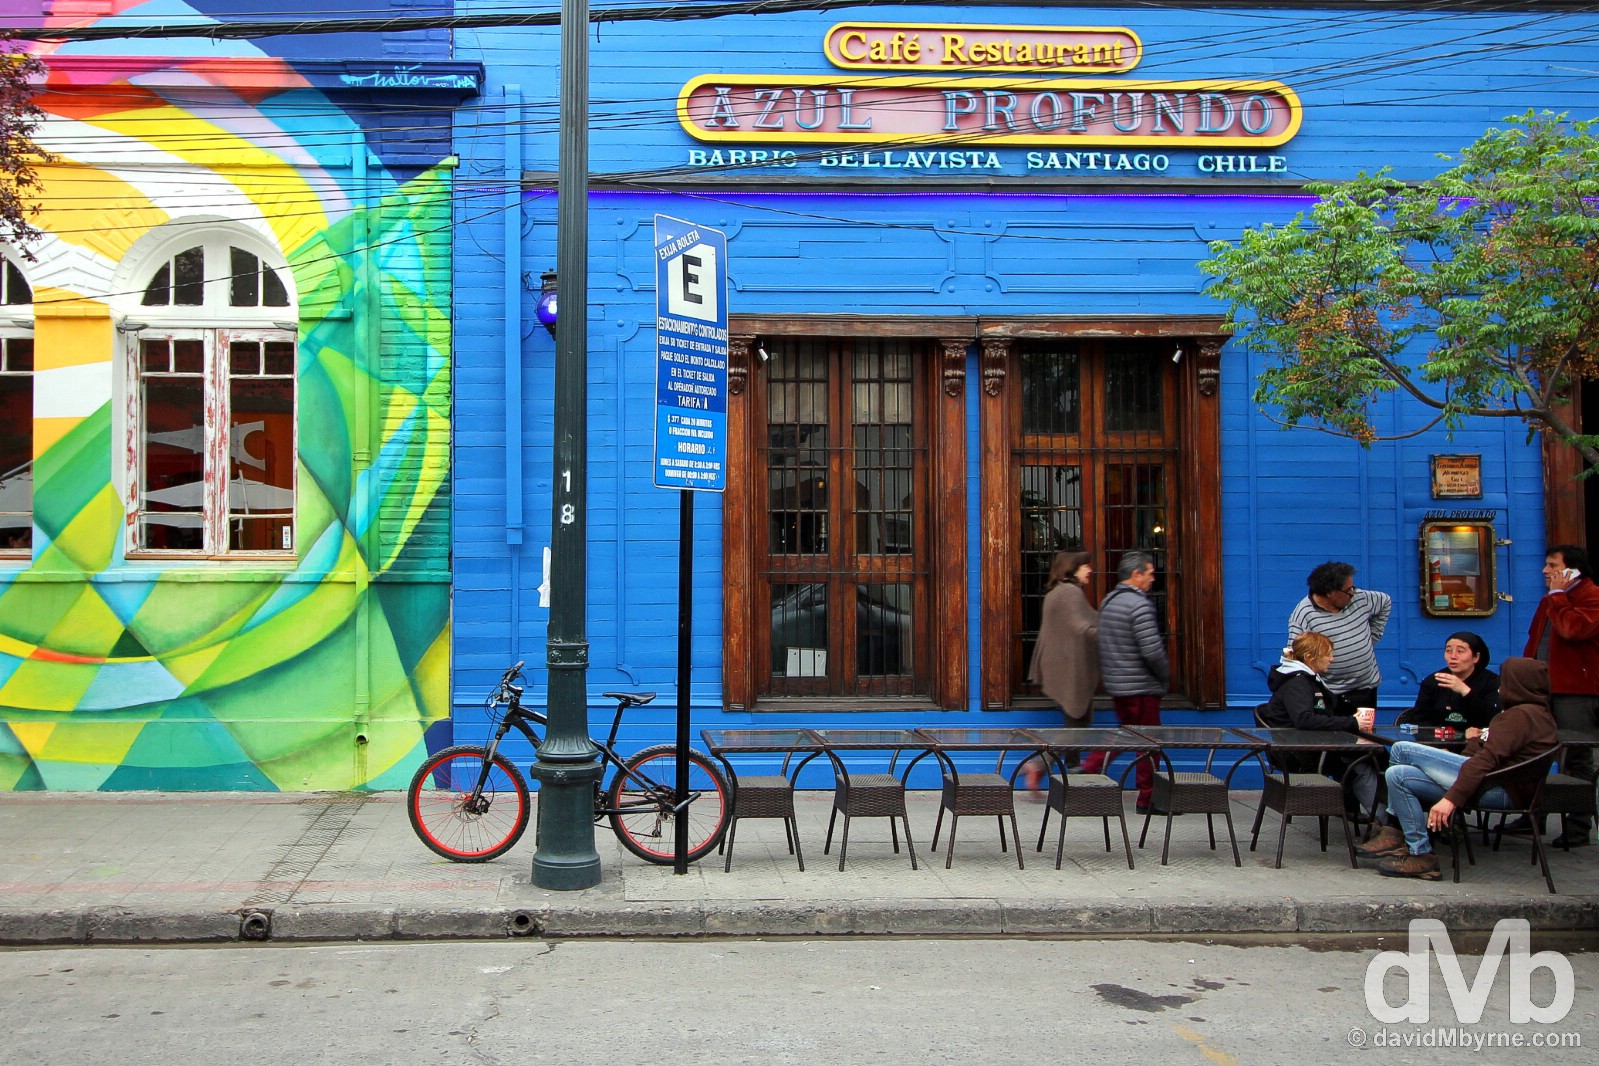 Colourful & bohemian Barrio Bellavista in Santiago, Chile. October 6, 2015.